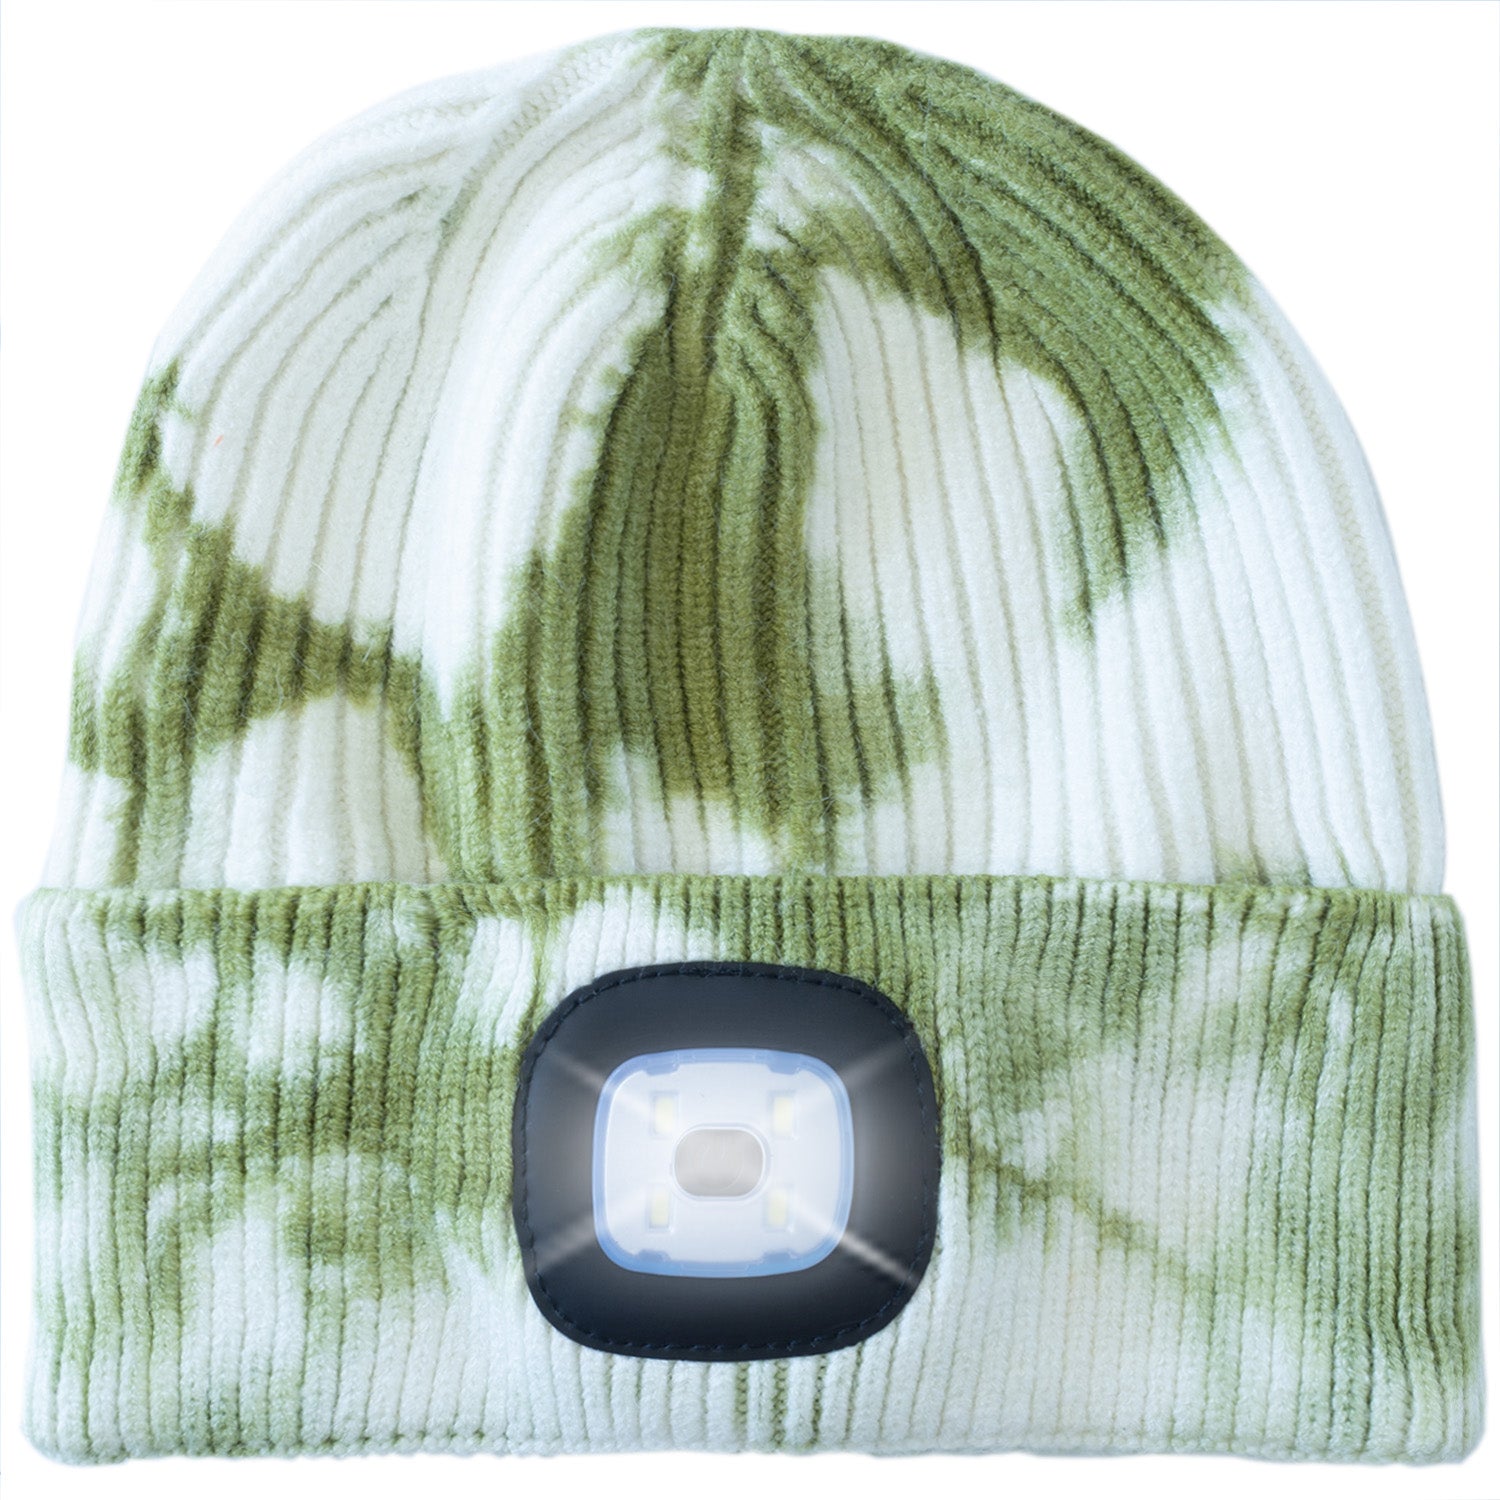 Headlightz® Beanie - Knit Dye – Green Tie Innovation Roq 